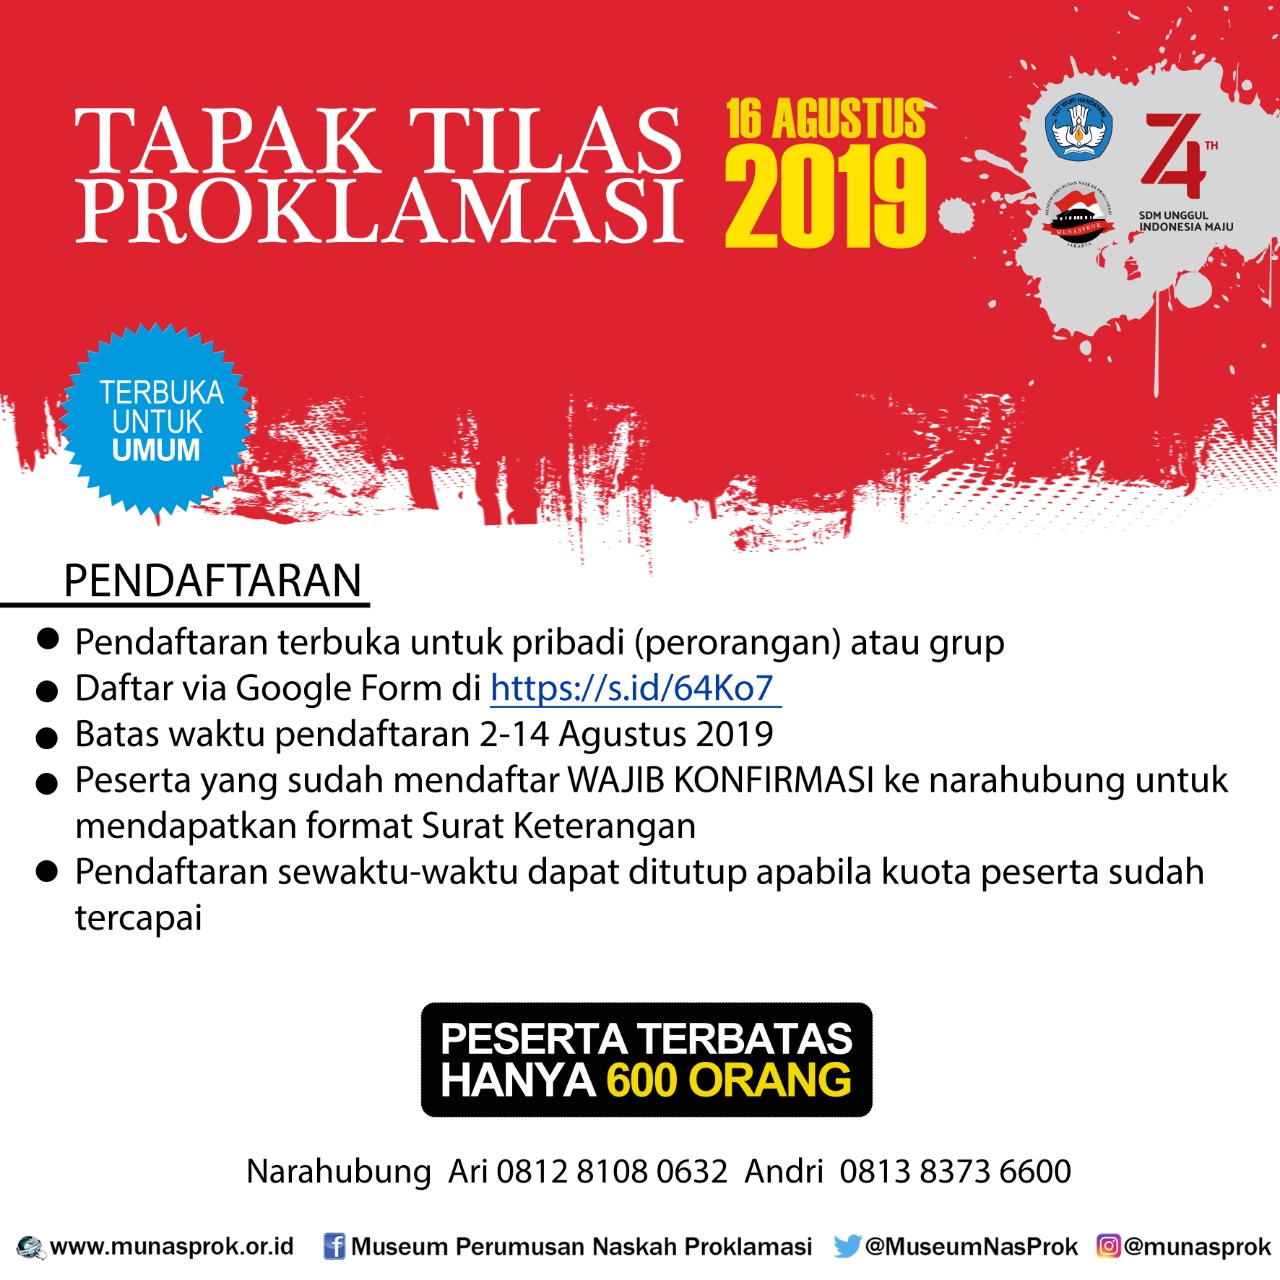 You are currently viewing Update Peserta Terverifikasi Kegiatan Tapak Tilas Proklamasi 2019